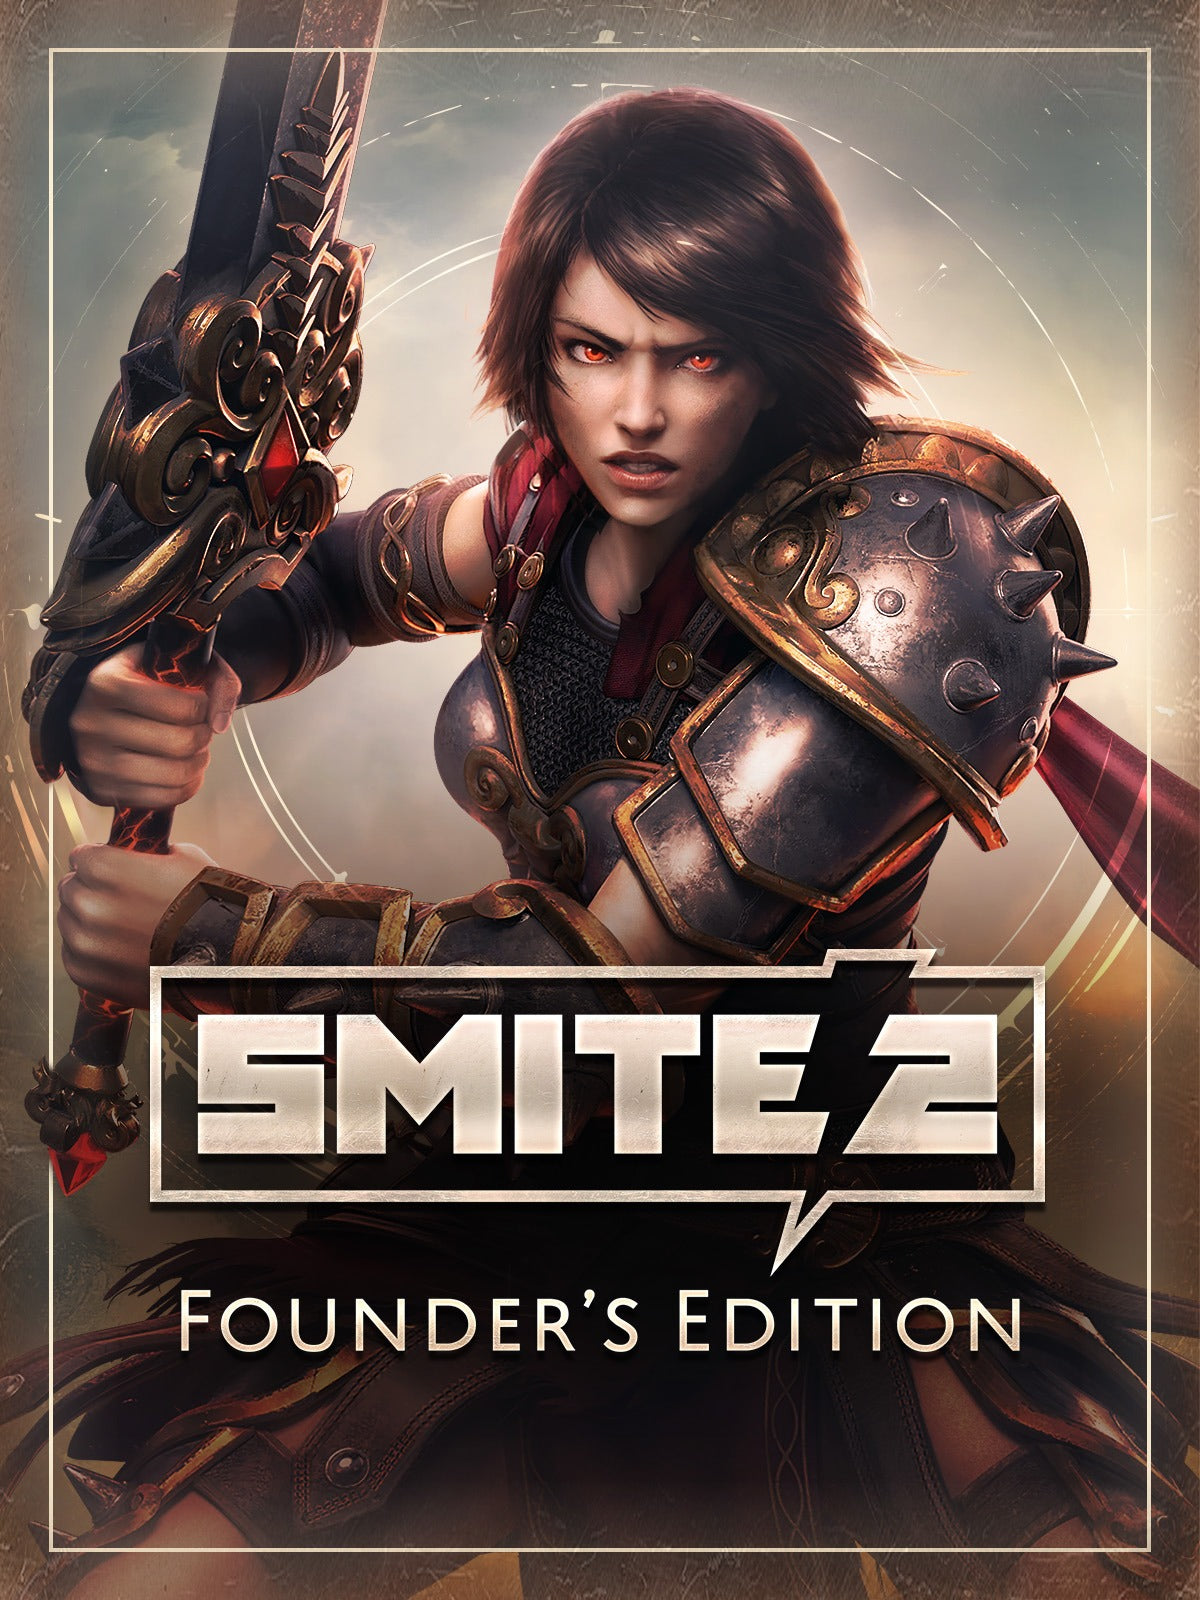 SMITE 2 (Founder's Edition) - Xbox